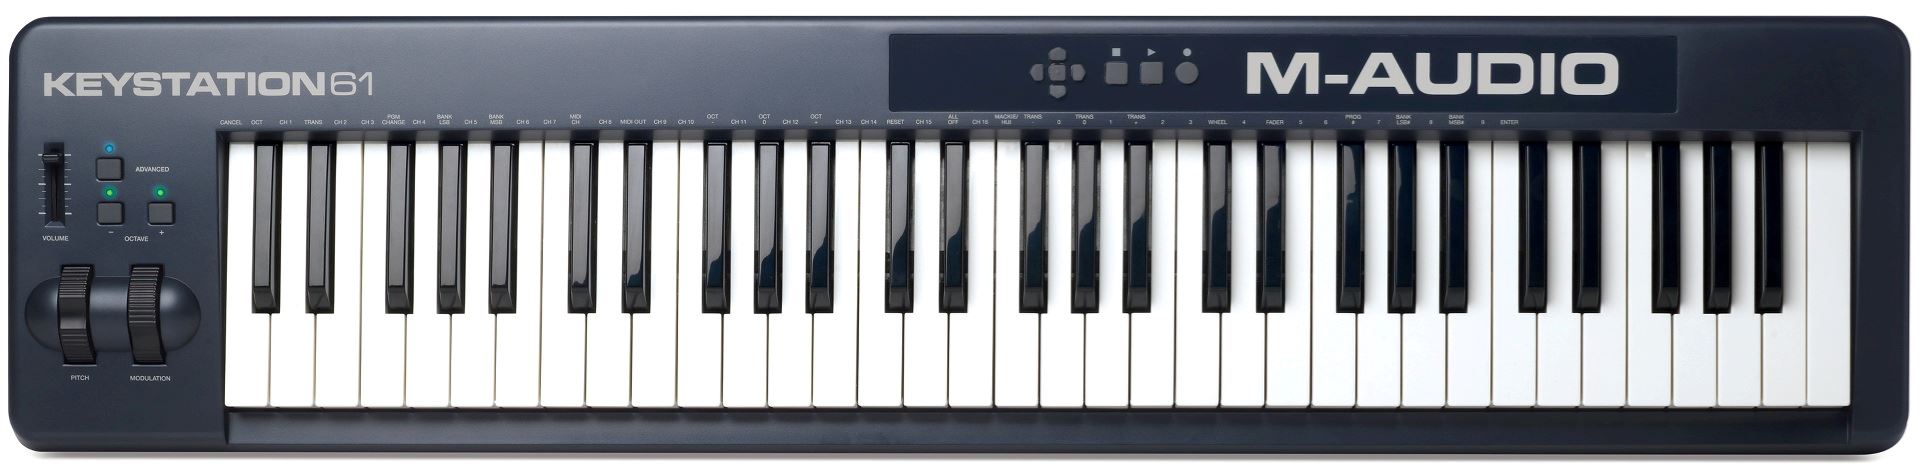 Midi-контроллер-клавиатура M-Audio Keystation 61 II